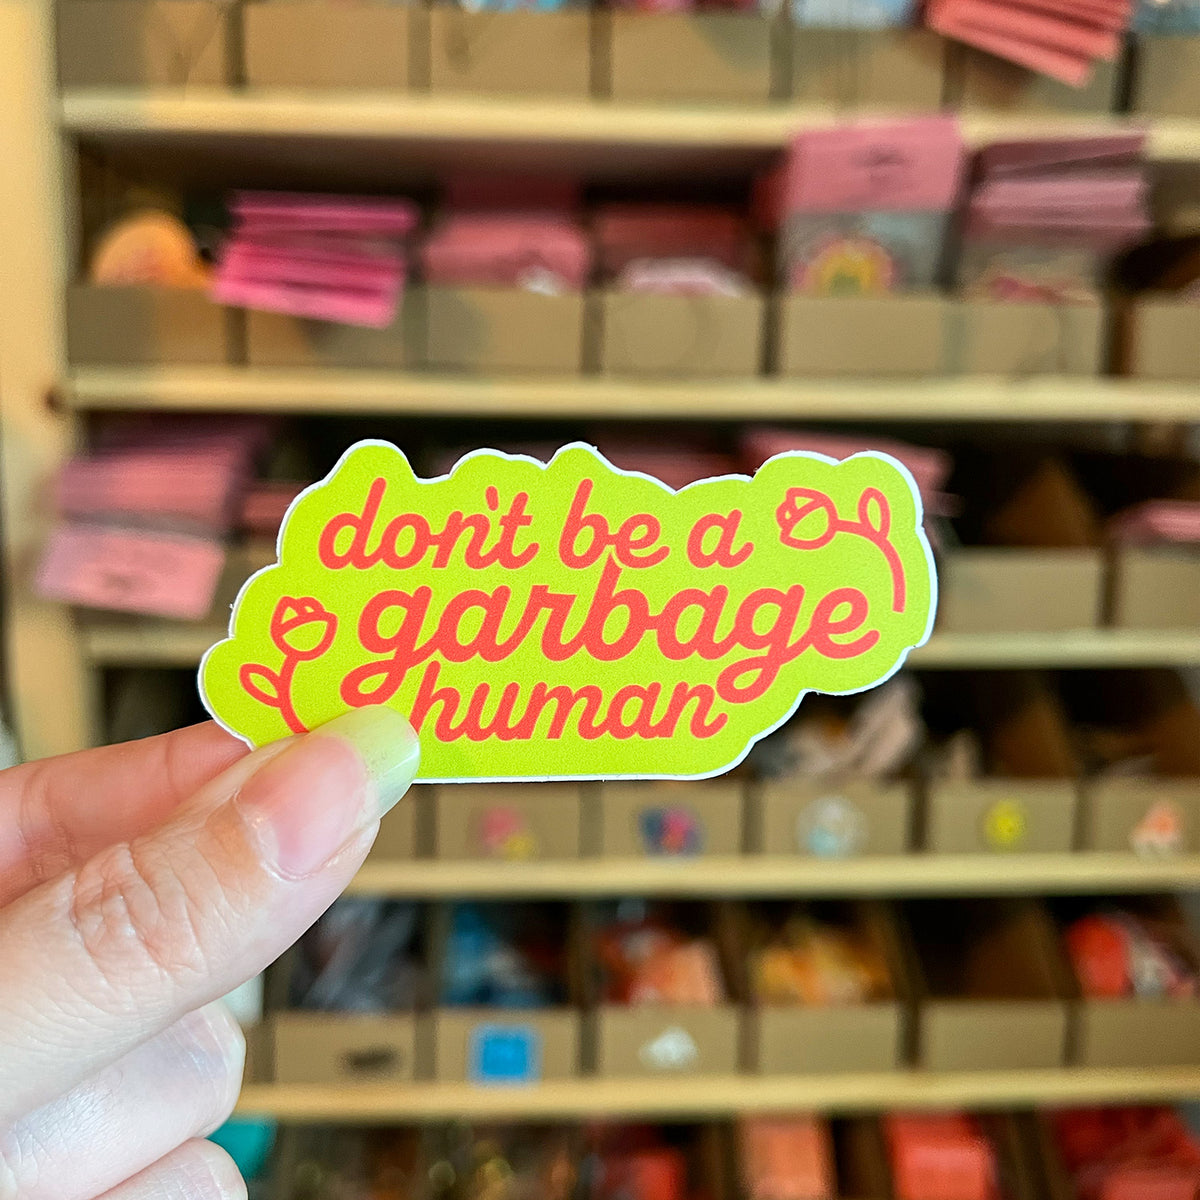 Garbage Human Sticker